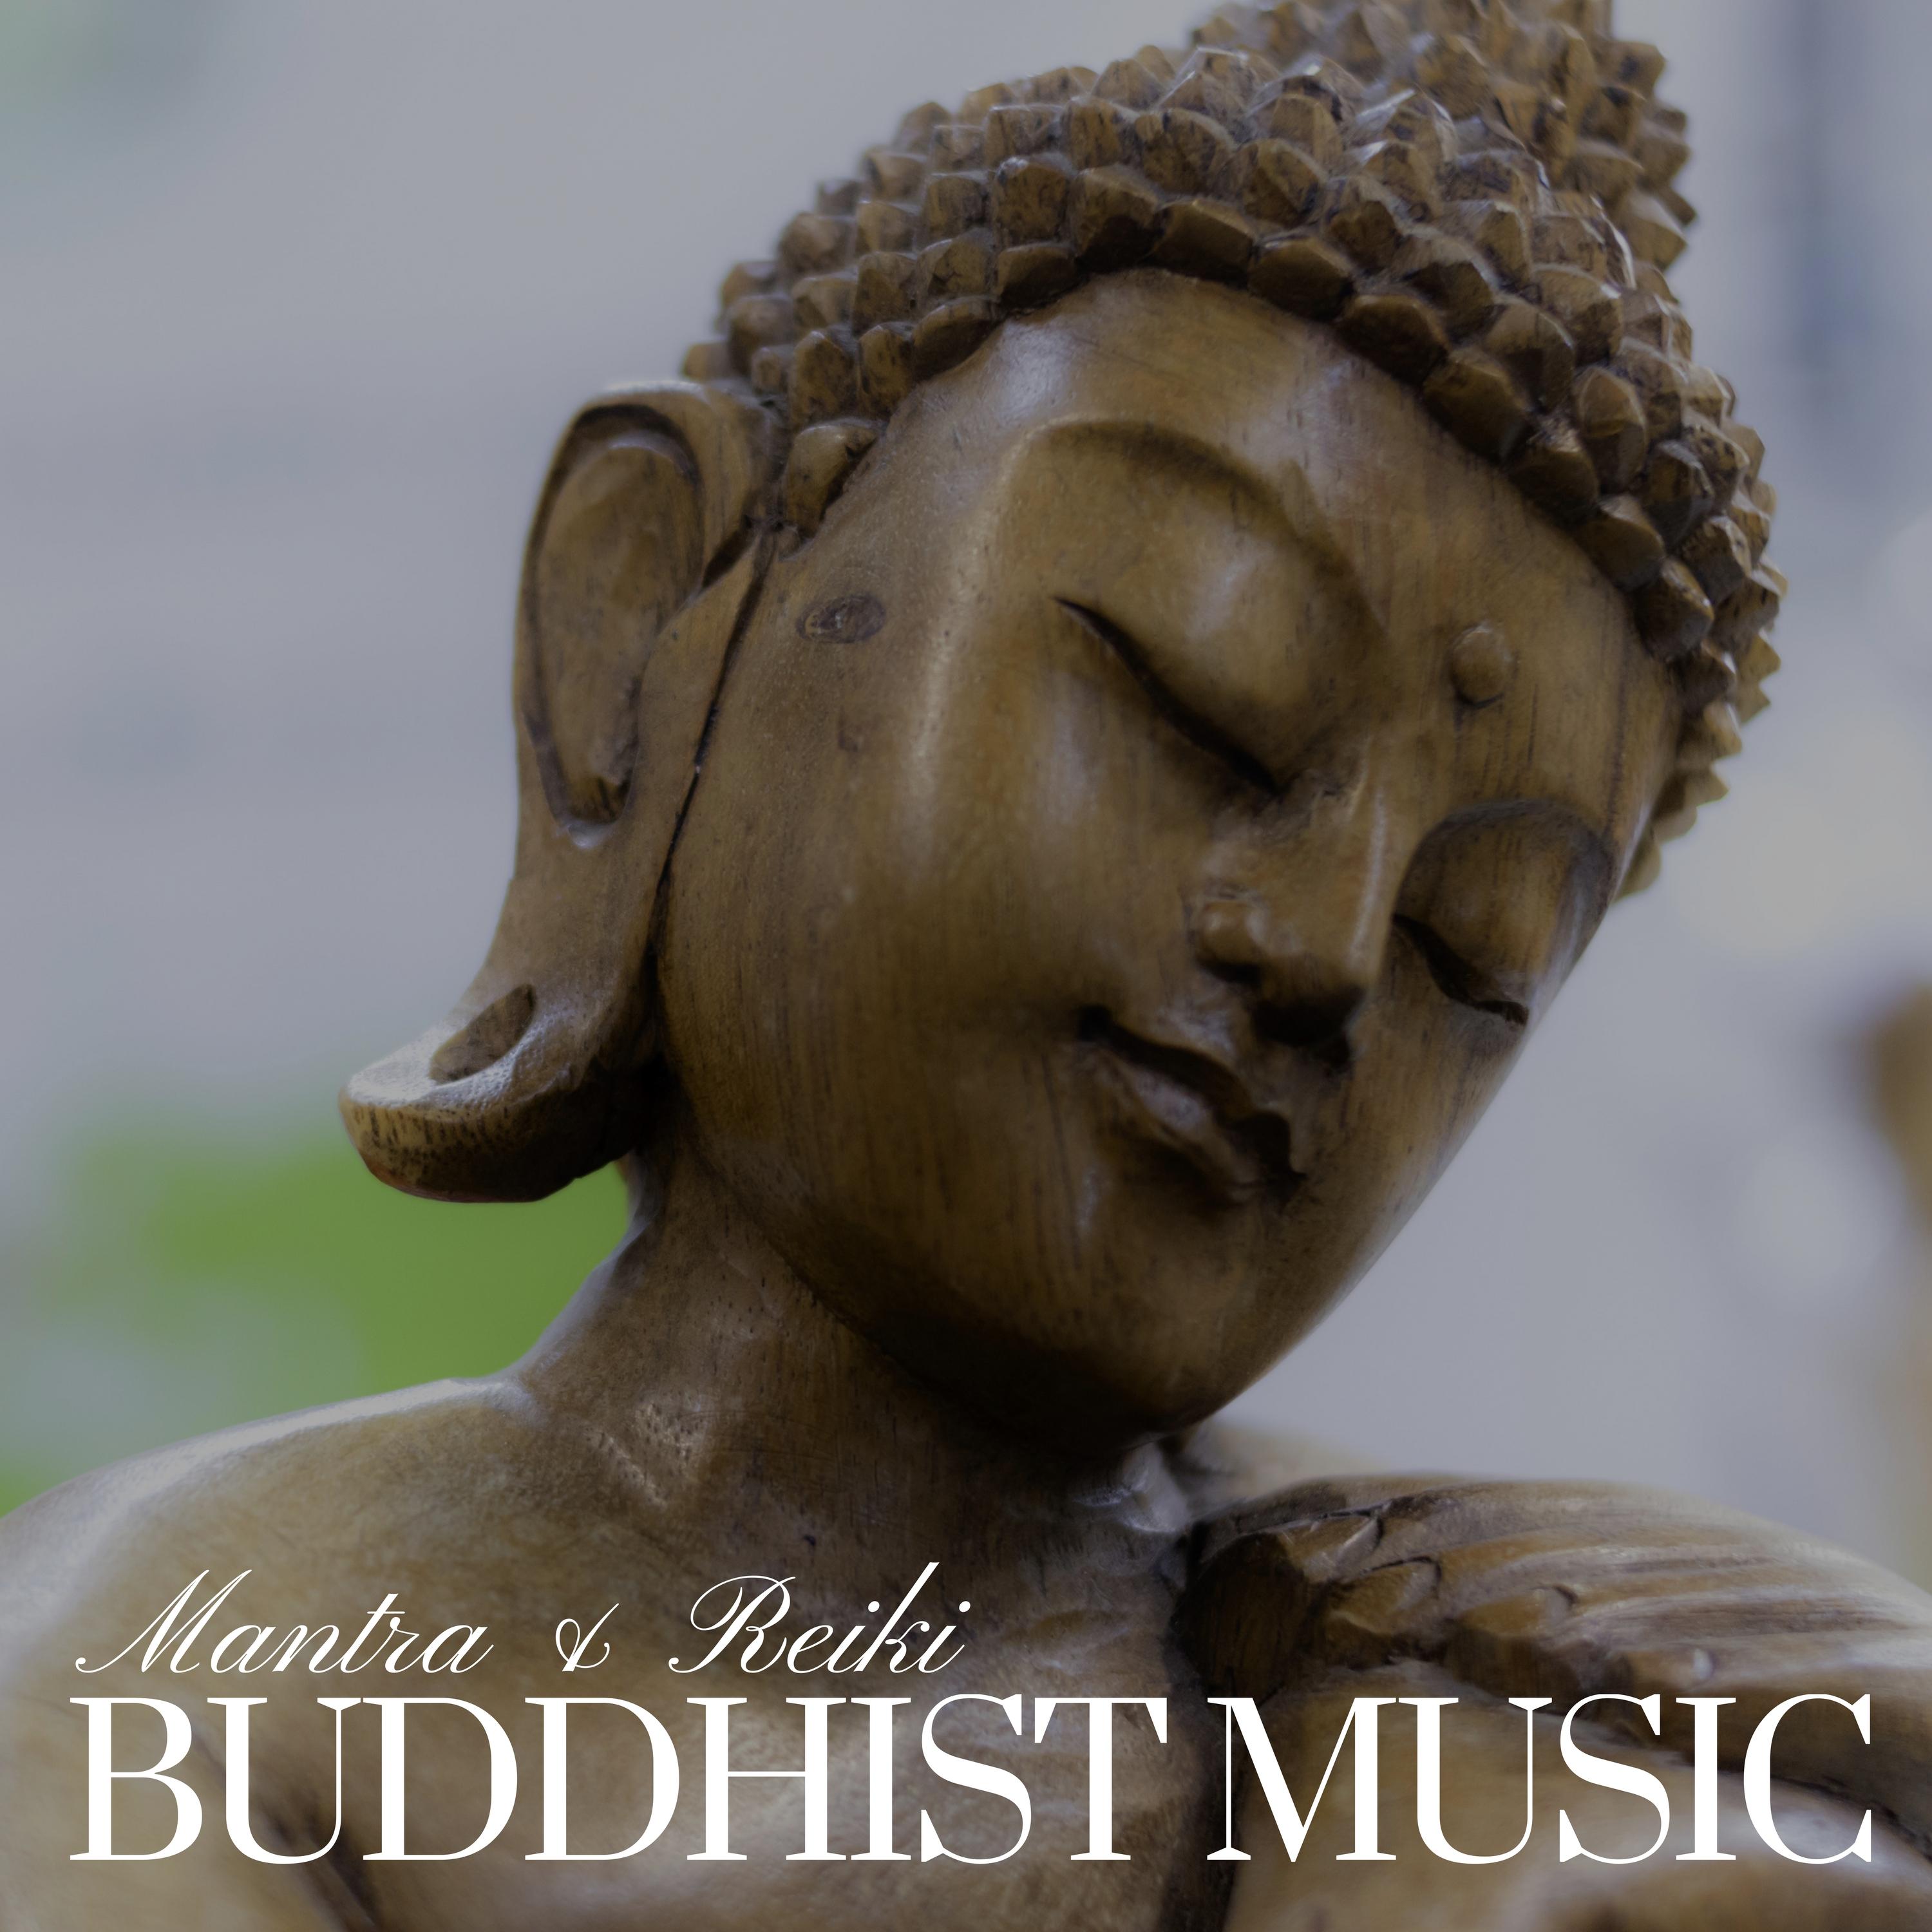 Buddhist Music: Mantra & Reiki, Spiritual Music, Meditation Music with Peaceful Sounds